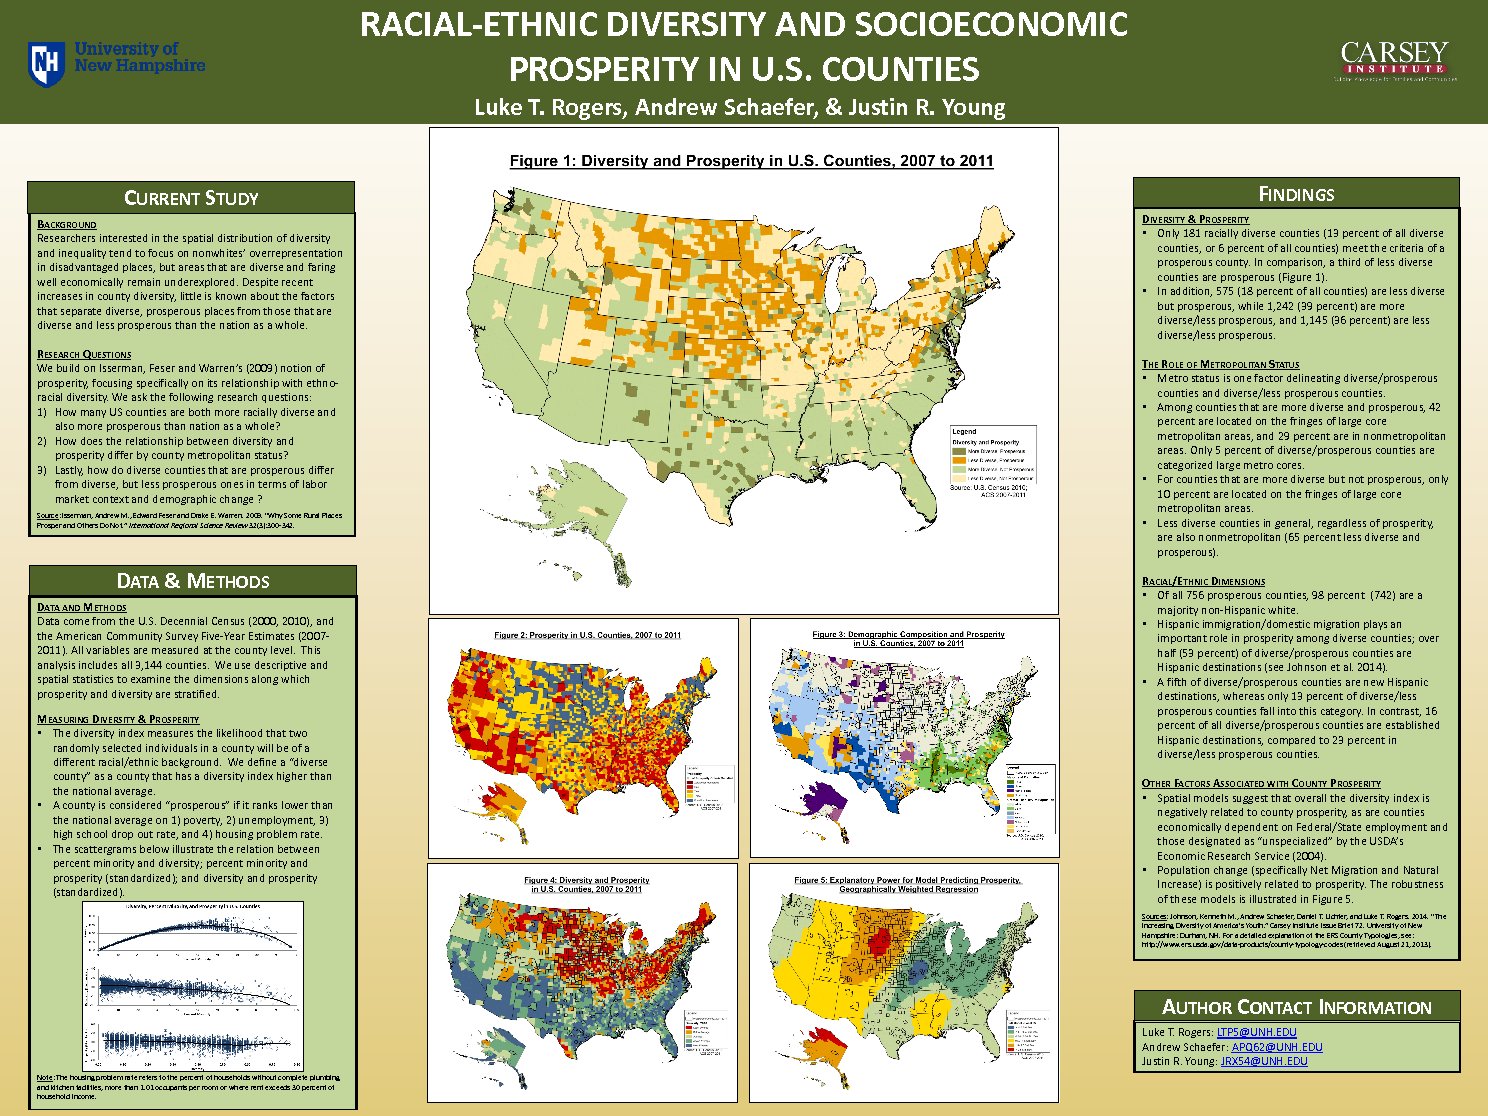 Racial/Ethnic Diversity And Socioeconomic Prosperity In U.S. Counties by jrx54